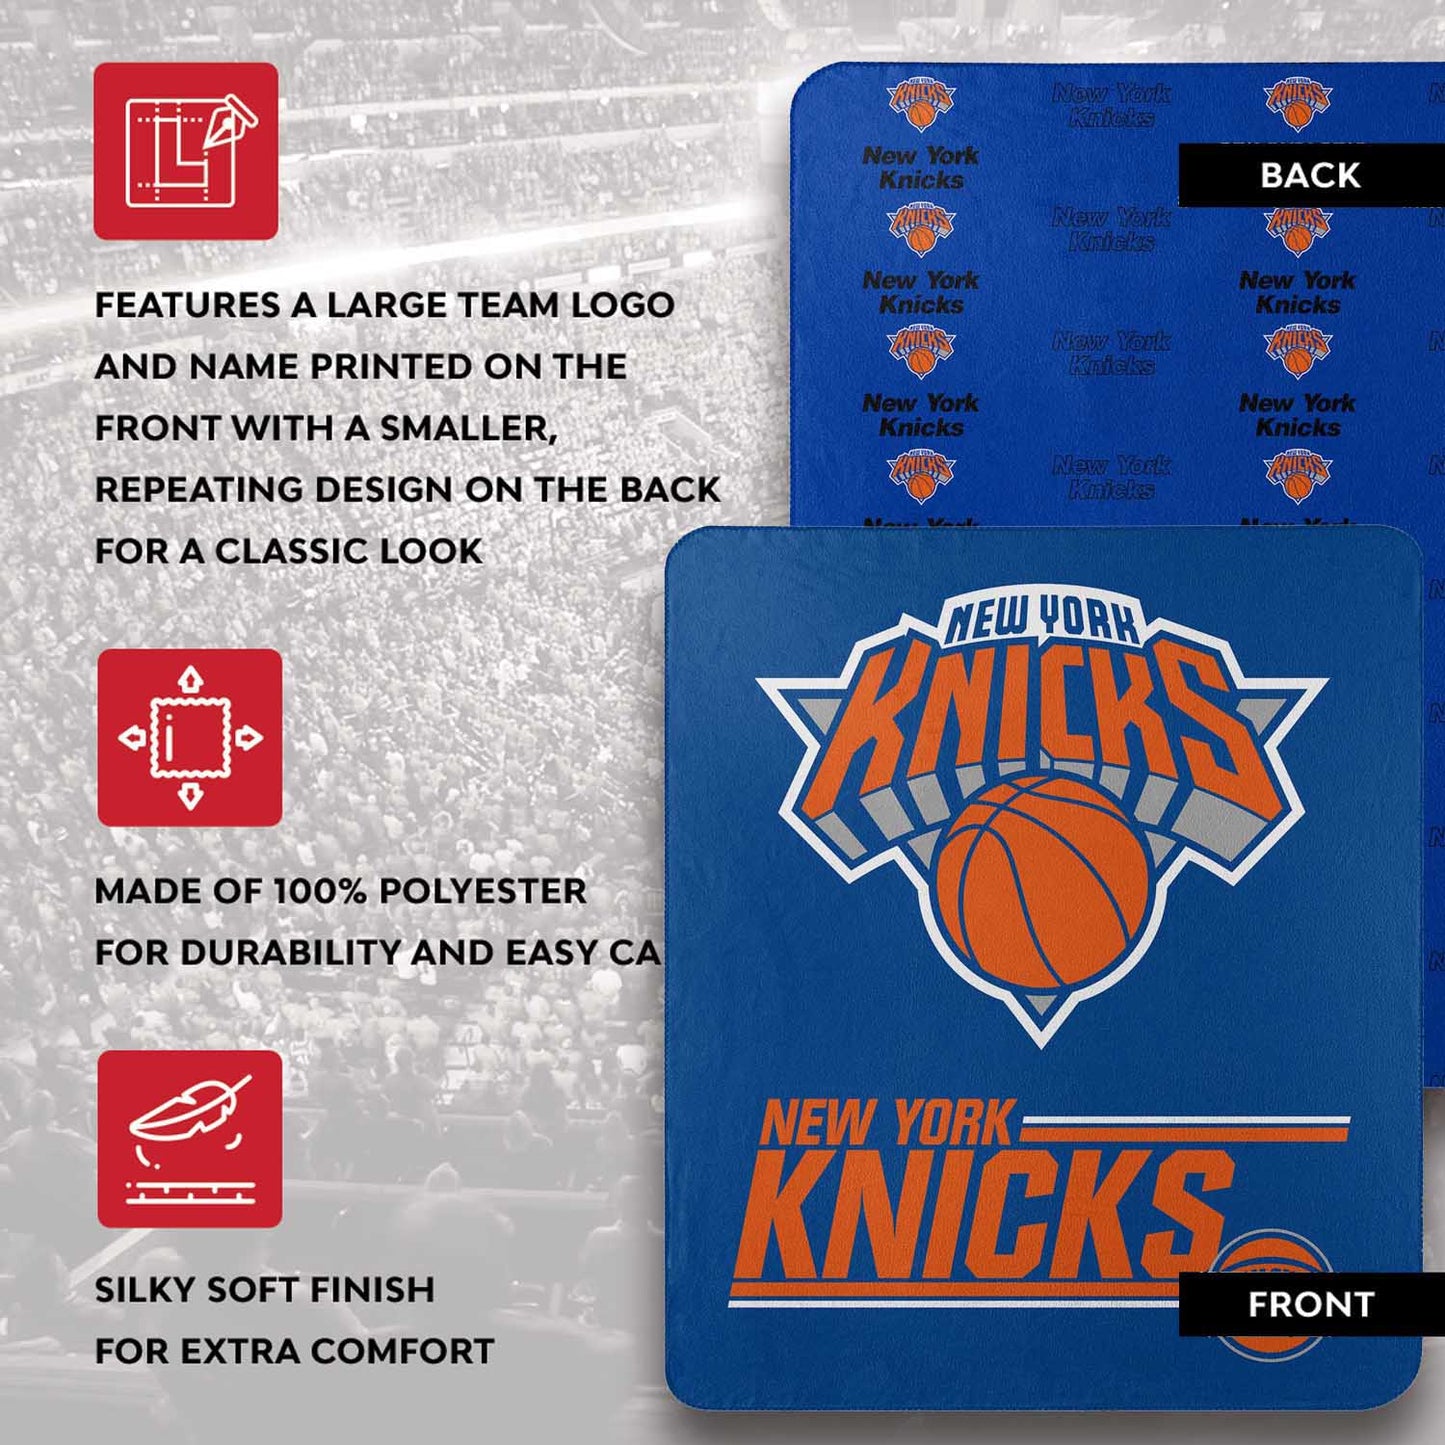 New York Knicks NBA Double Sided Blanket - Royal